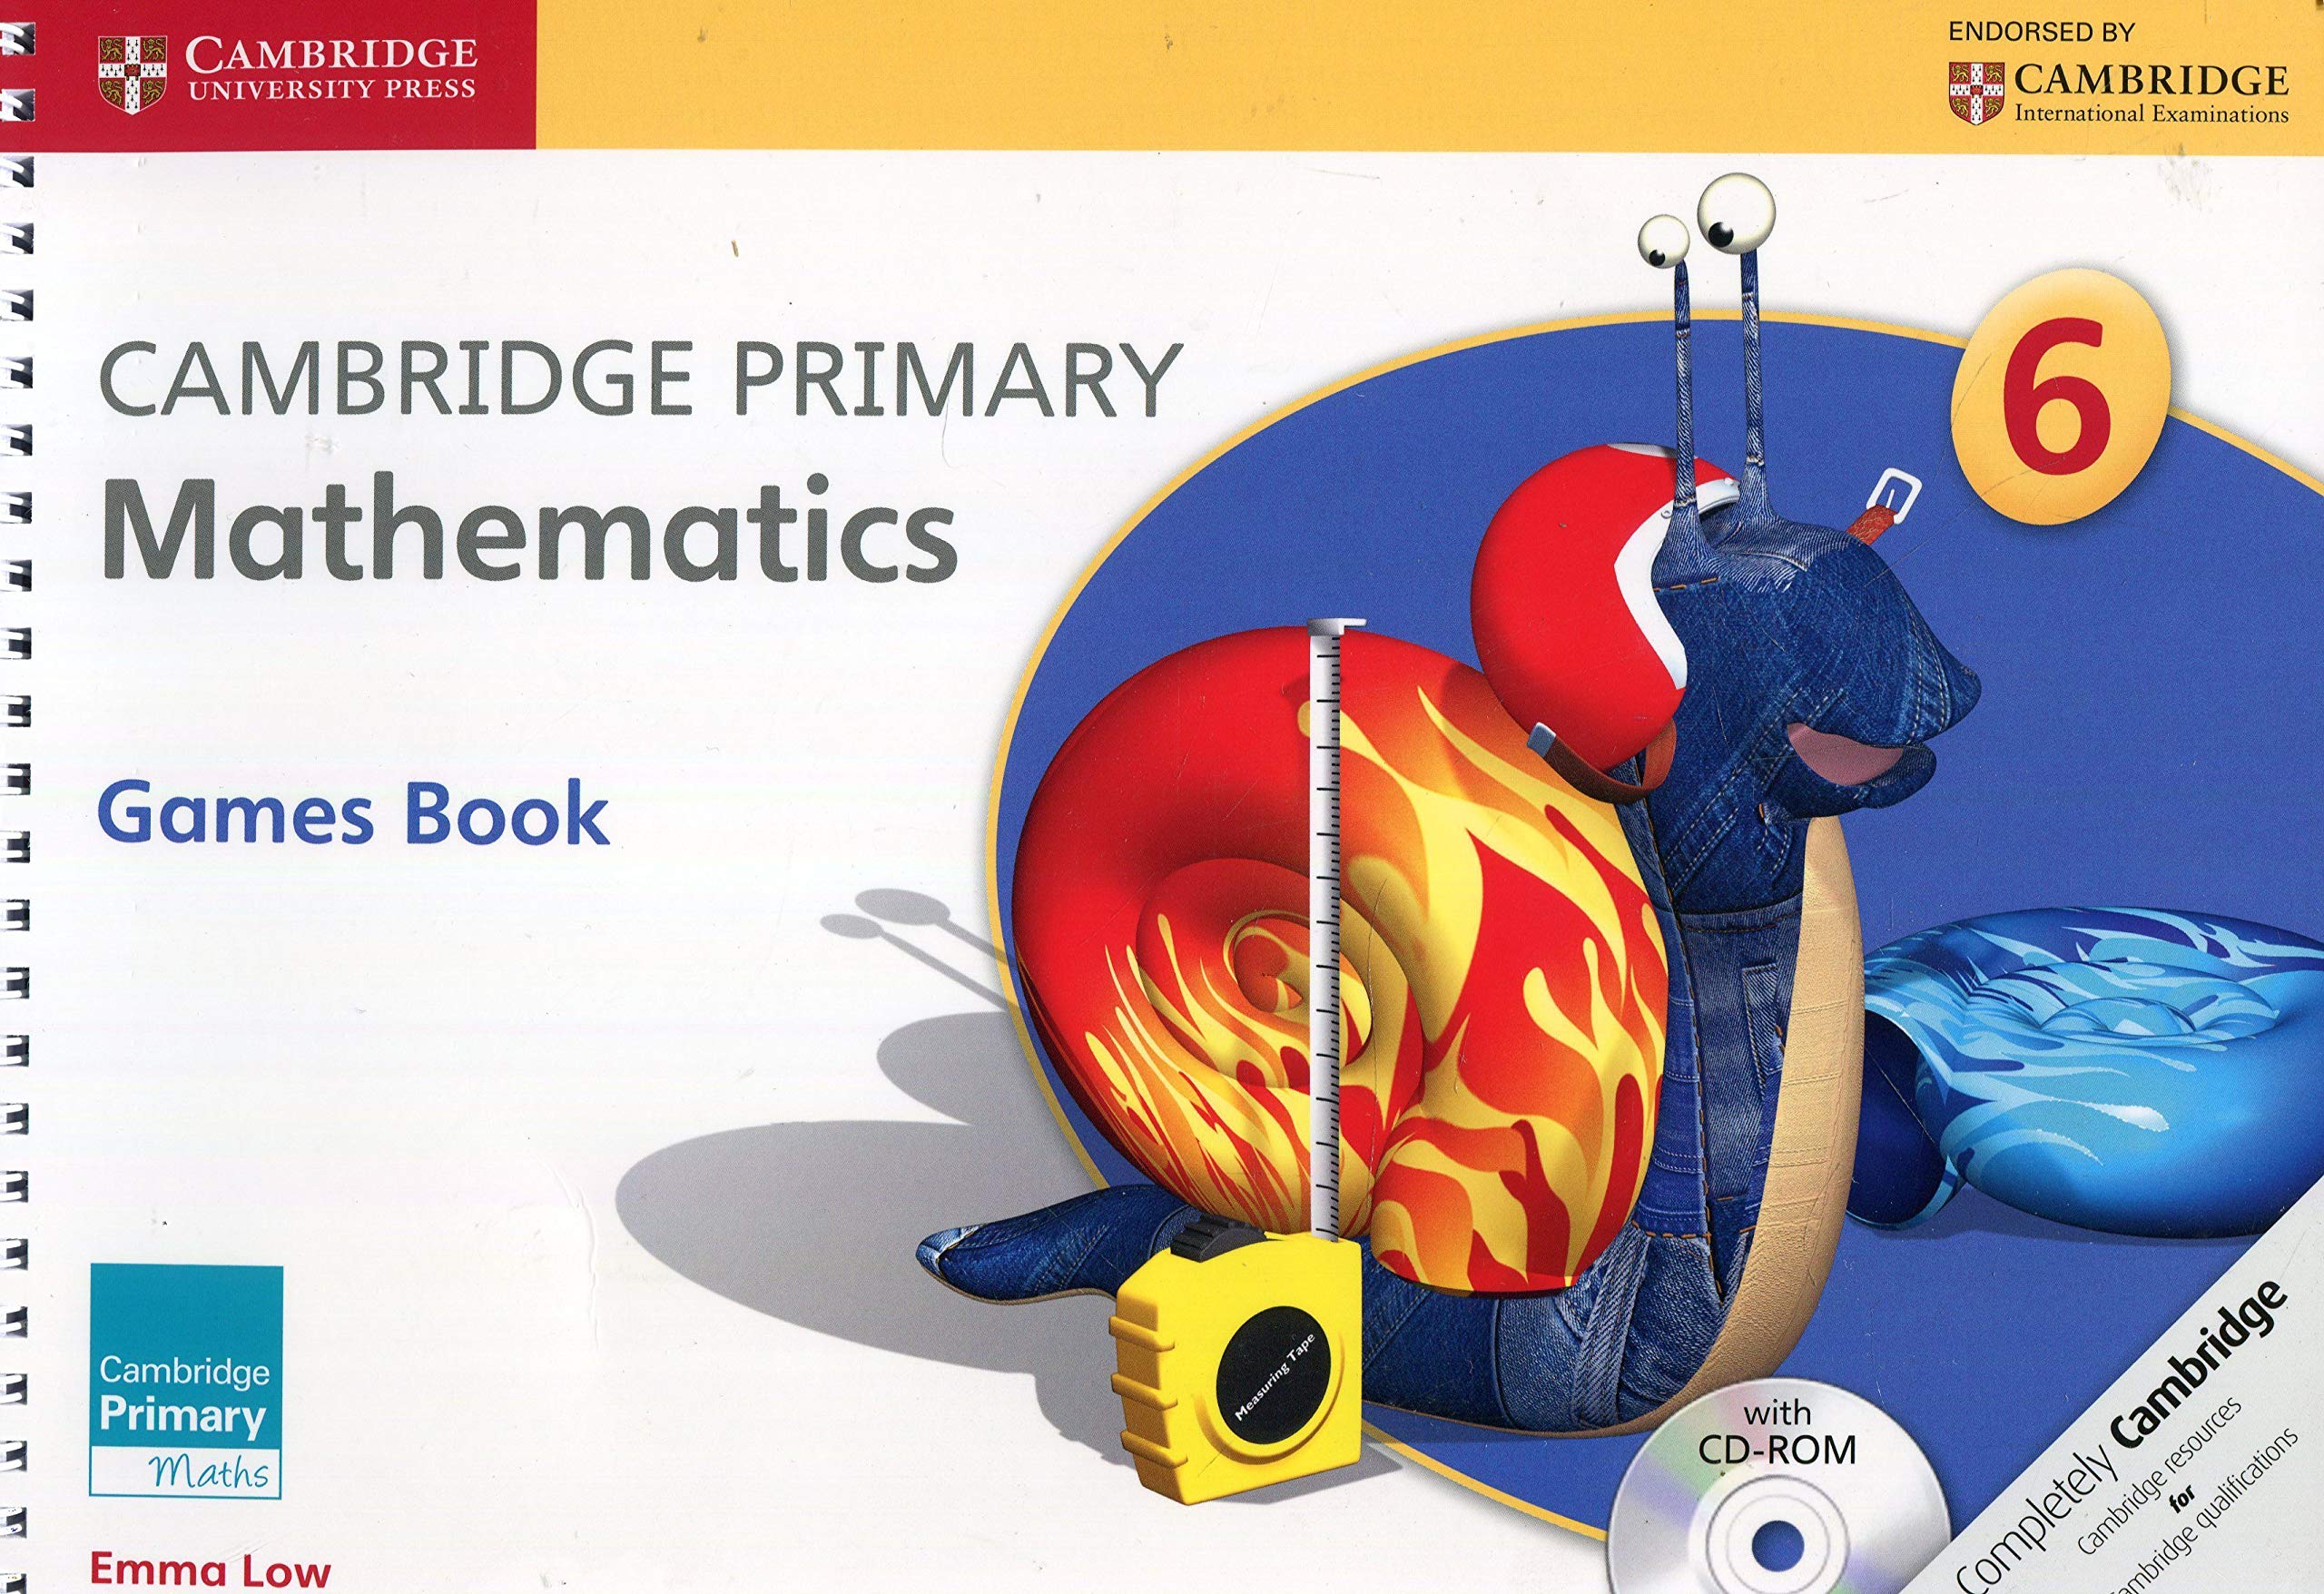 6 mathematics. Cambridge games. Cambridge Primary Math. Cambridge Math books. Cambridge Primary учебники.